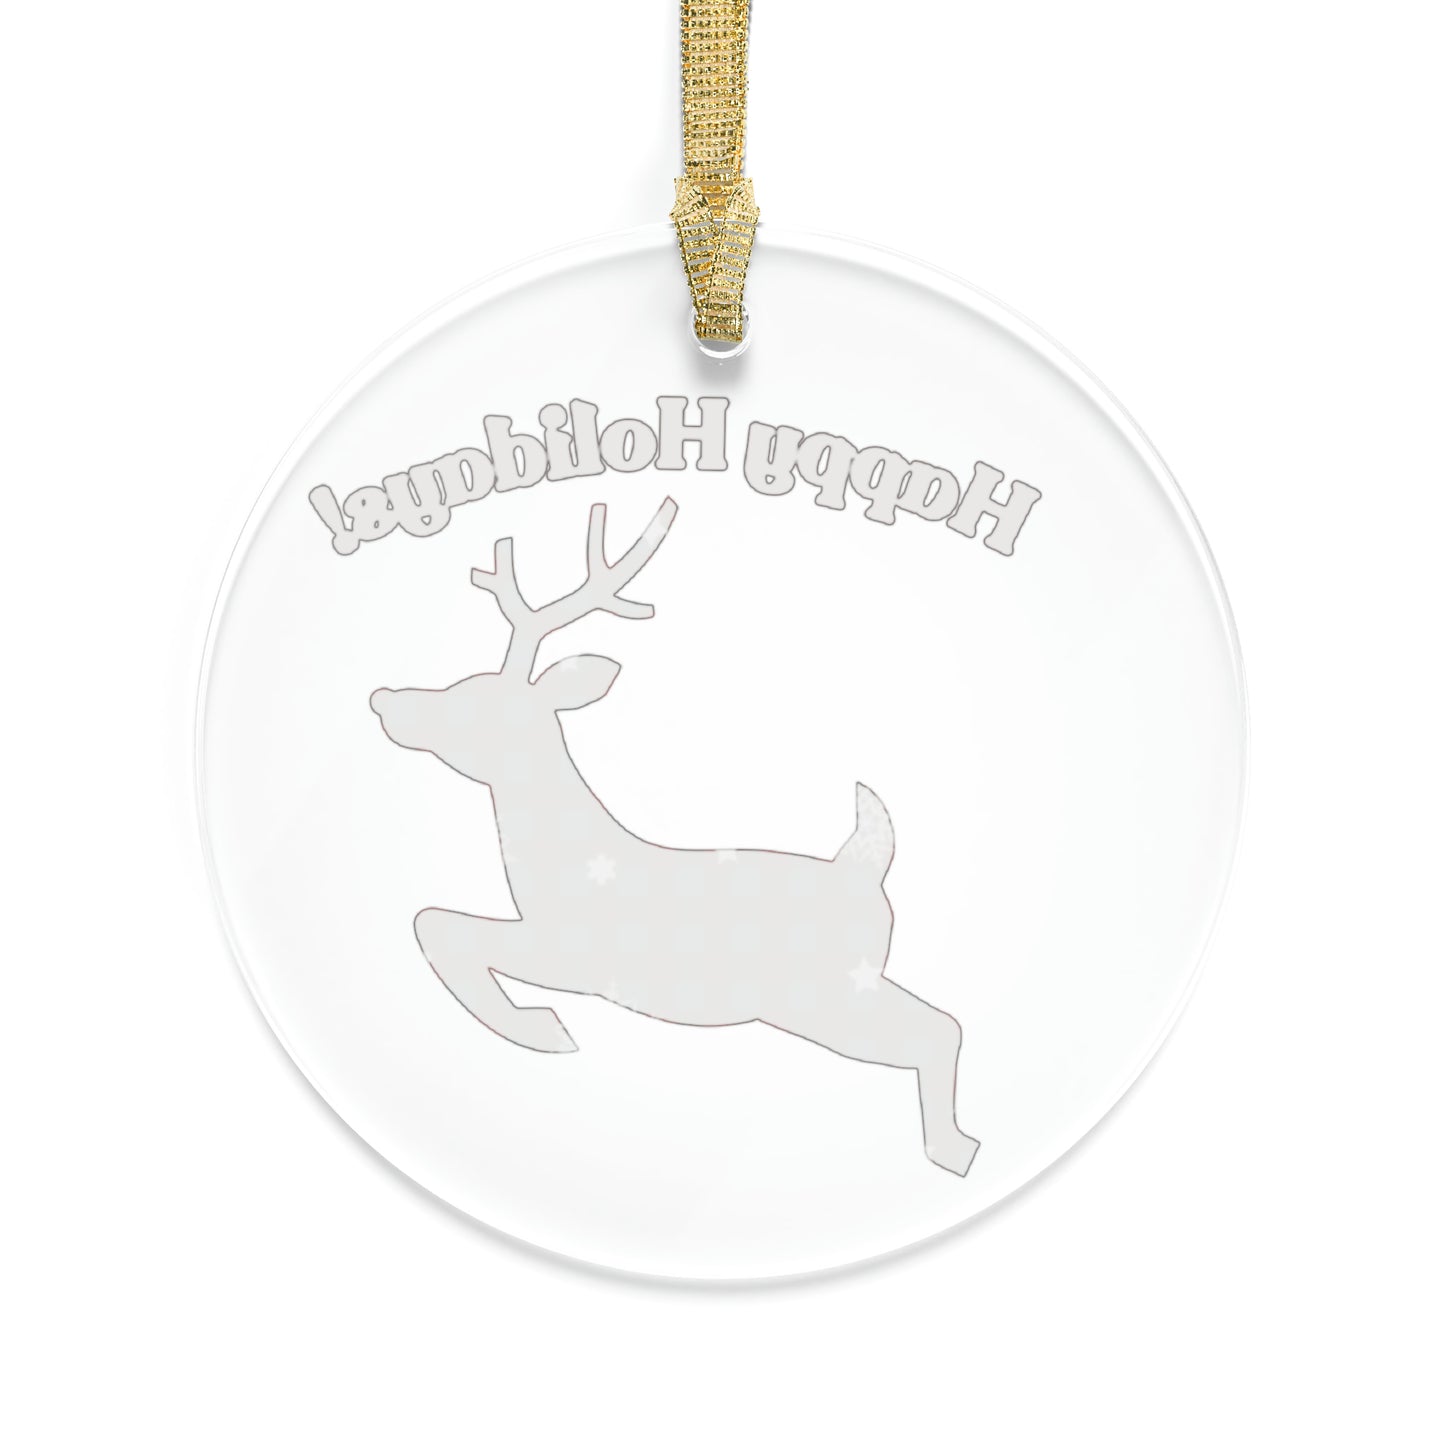 Reindeer Plaid Ornament : Acrylic Ornaments